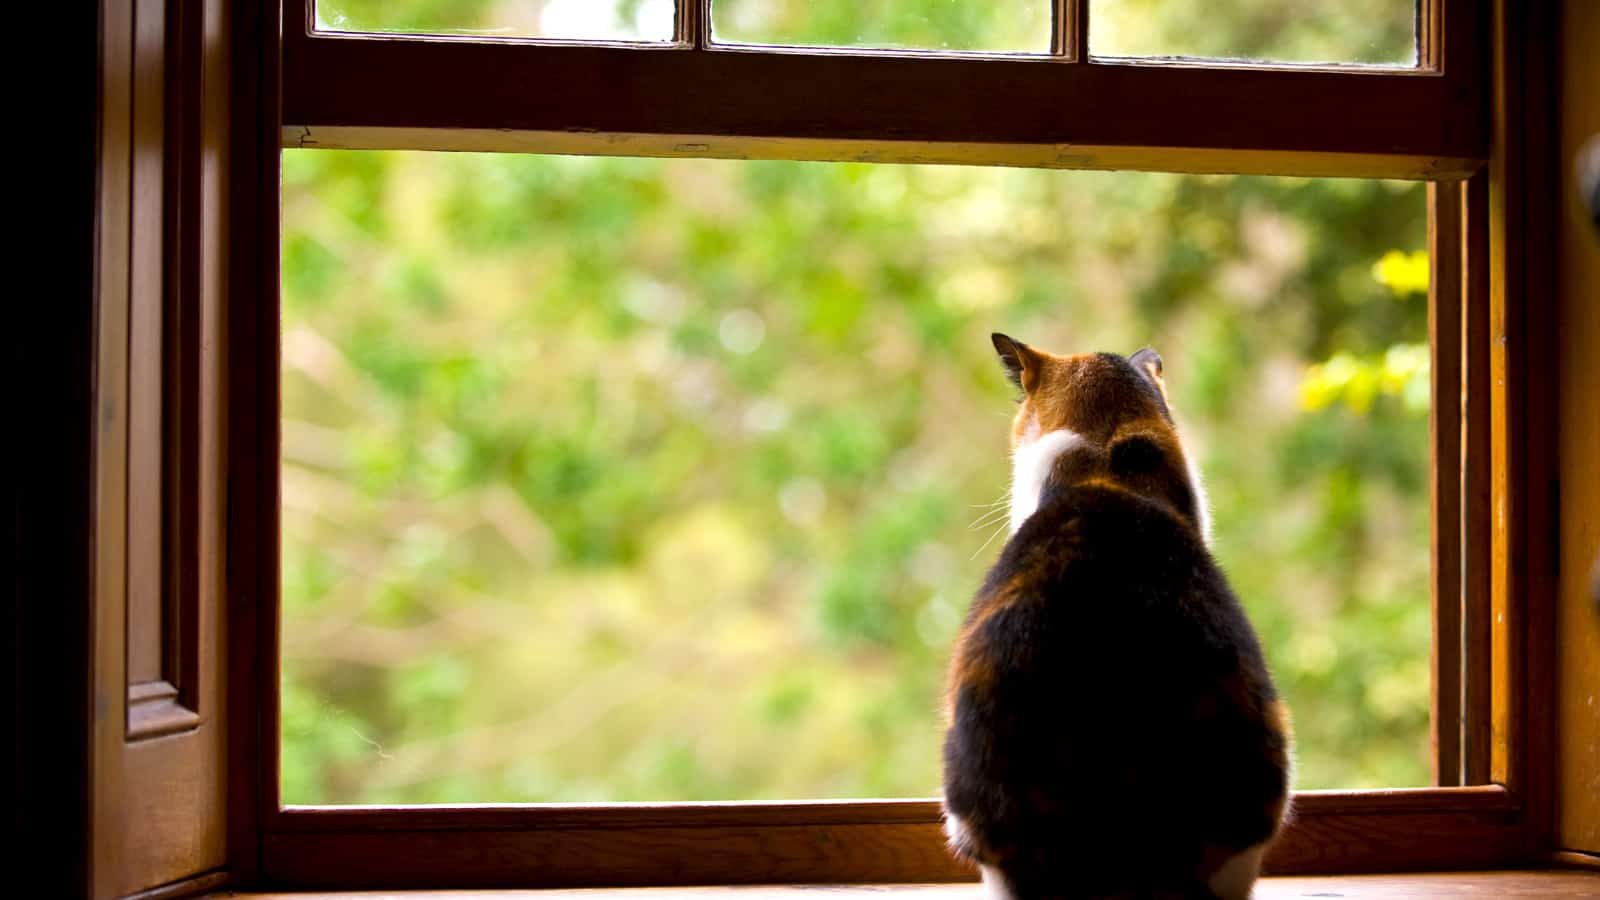 A fat cat sitting on a window sill looking outside.